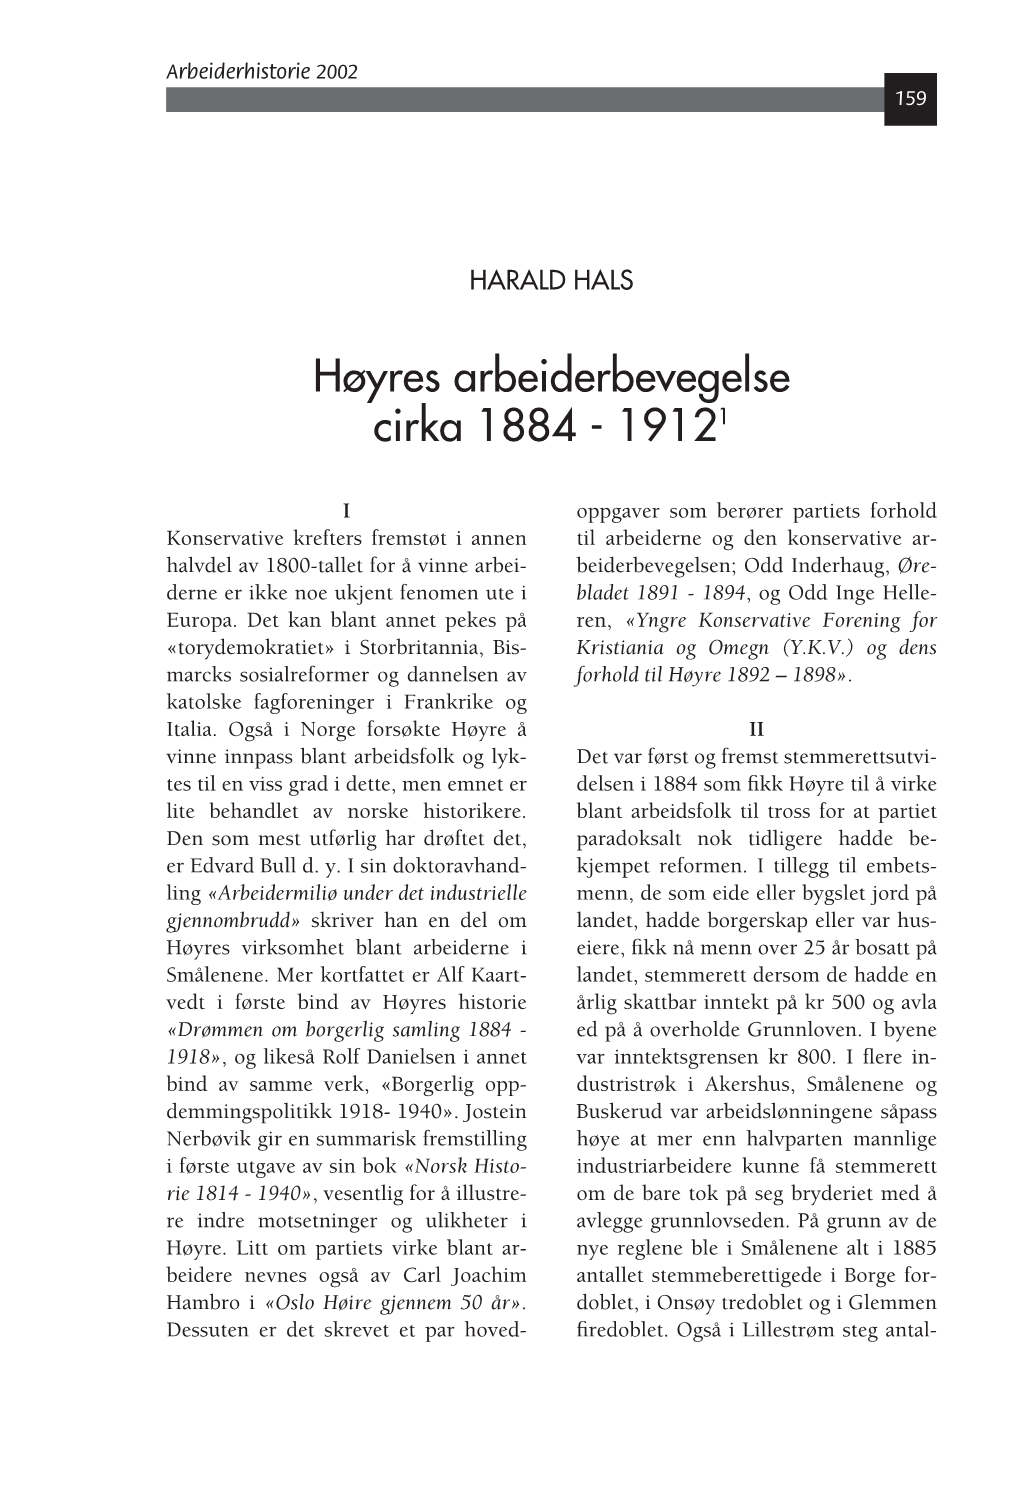 Harald Hals : Høyres Arbeiderbevegelse Cirka 1884-1912